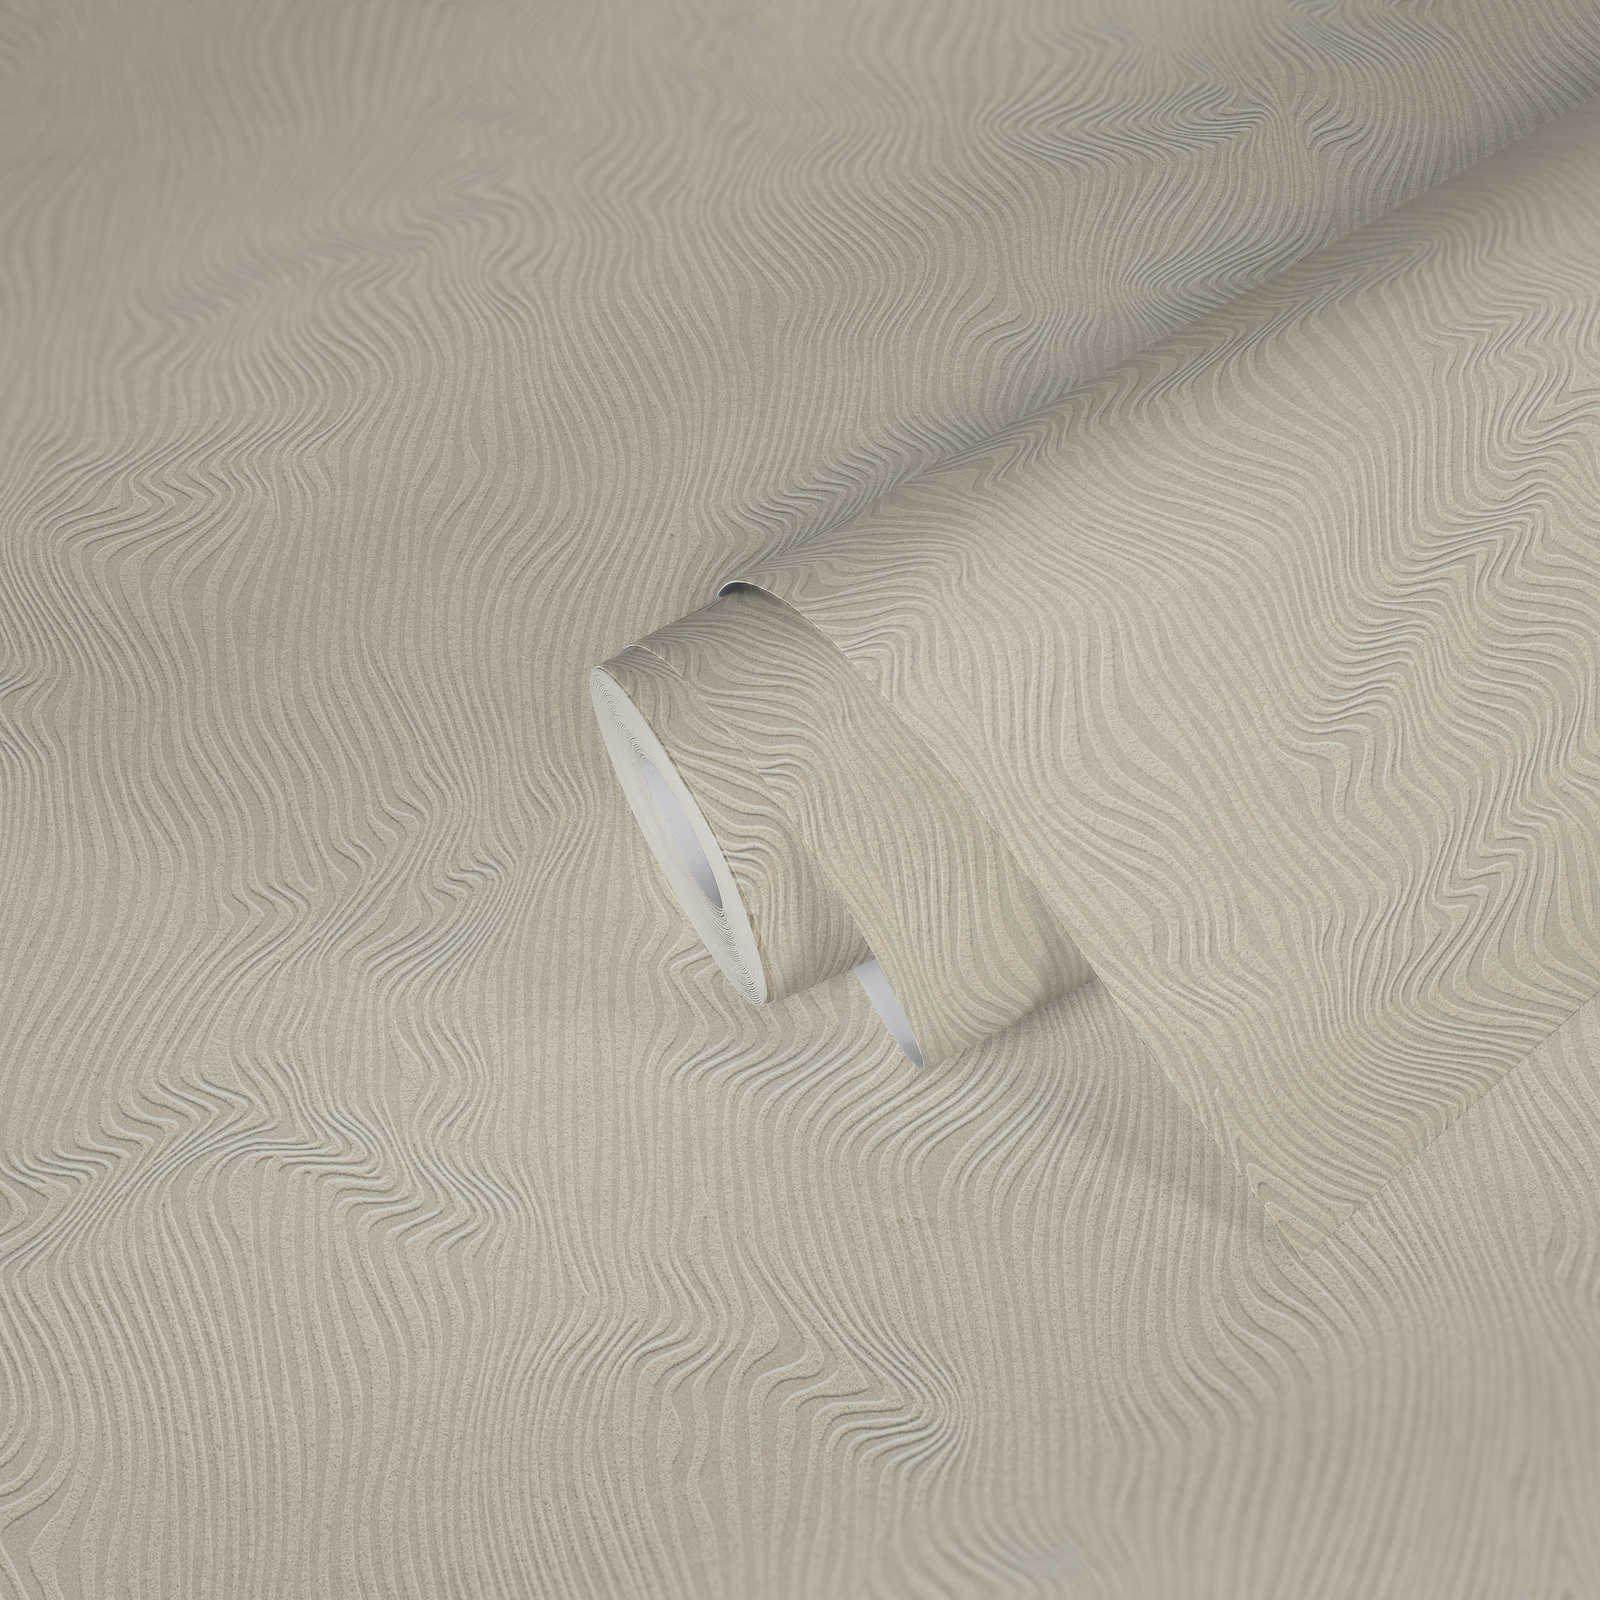             Plain wallpaper with organic line pattern - beige
        